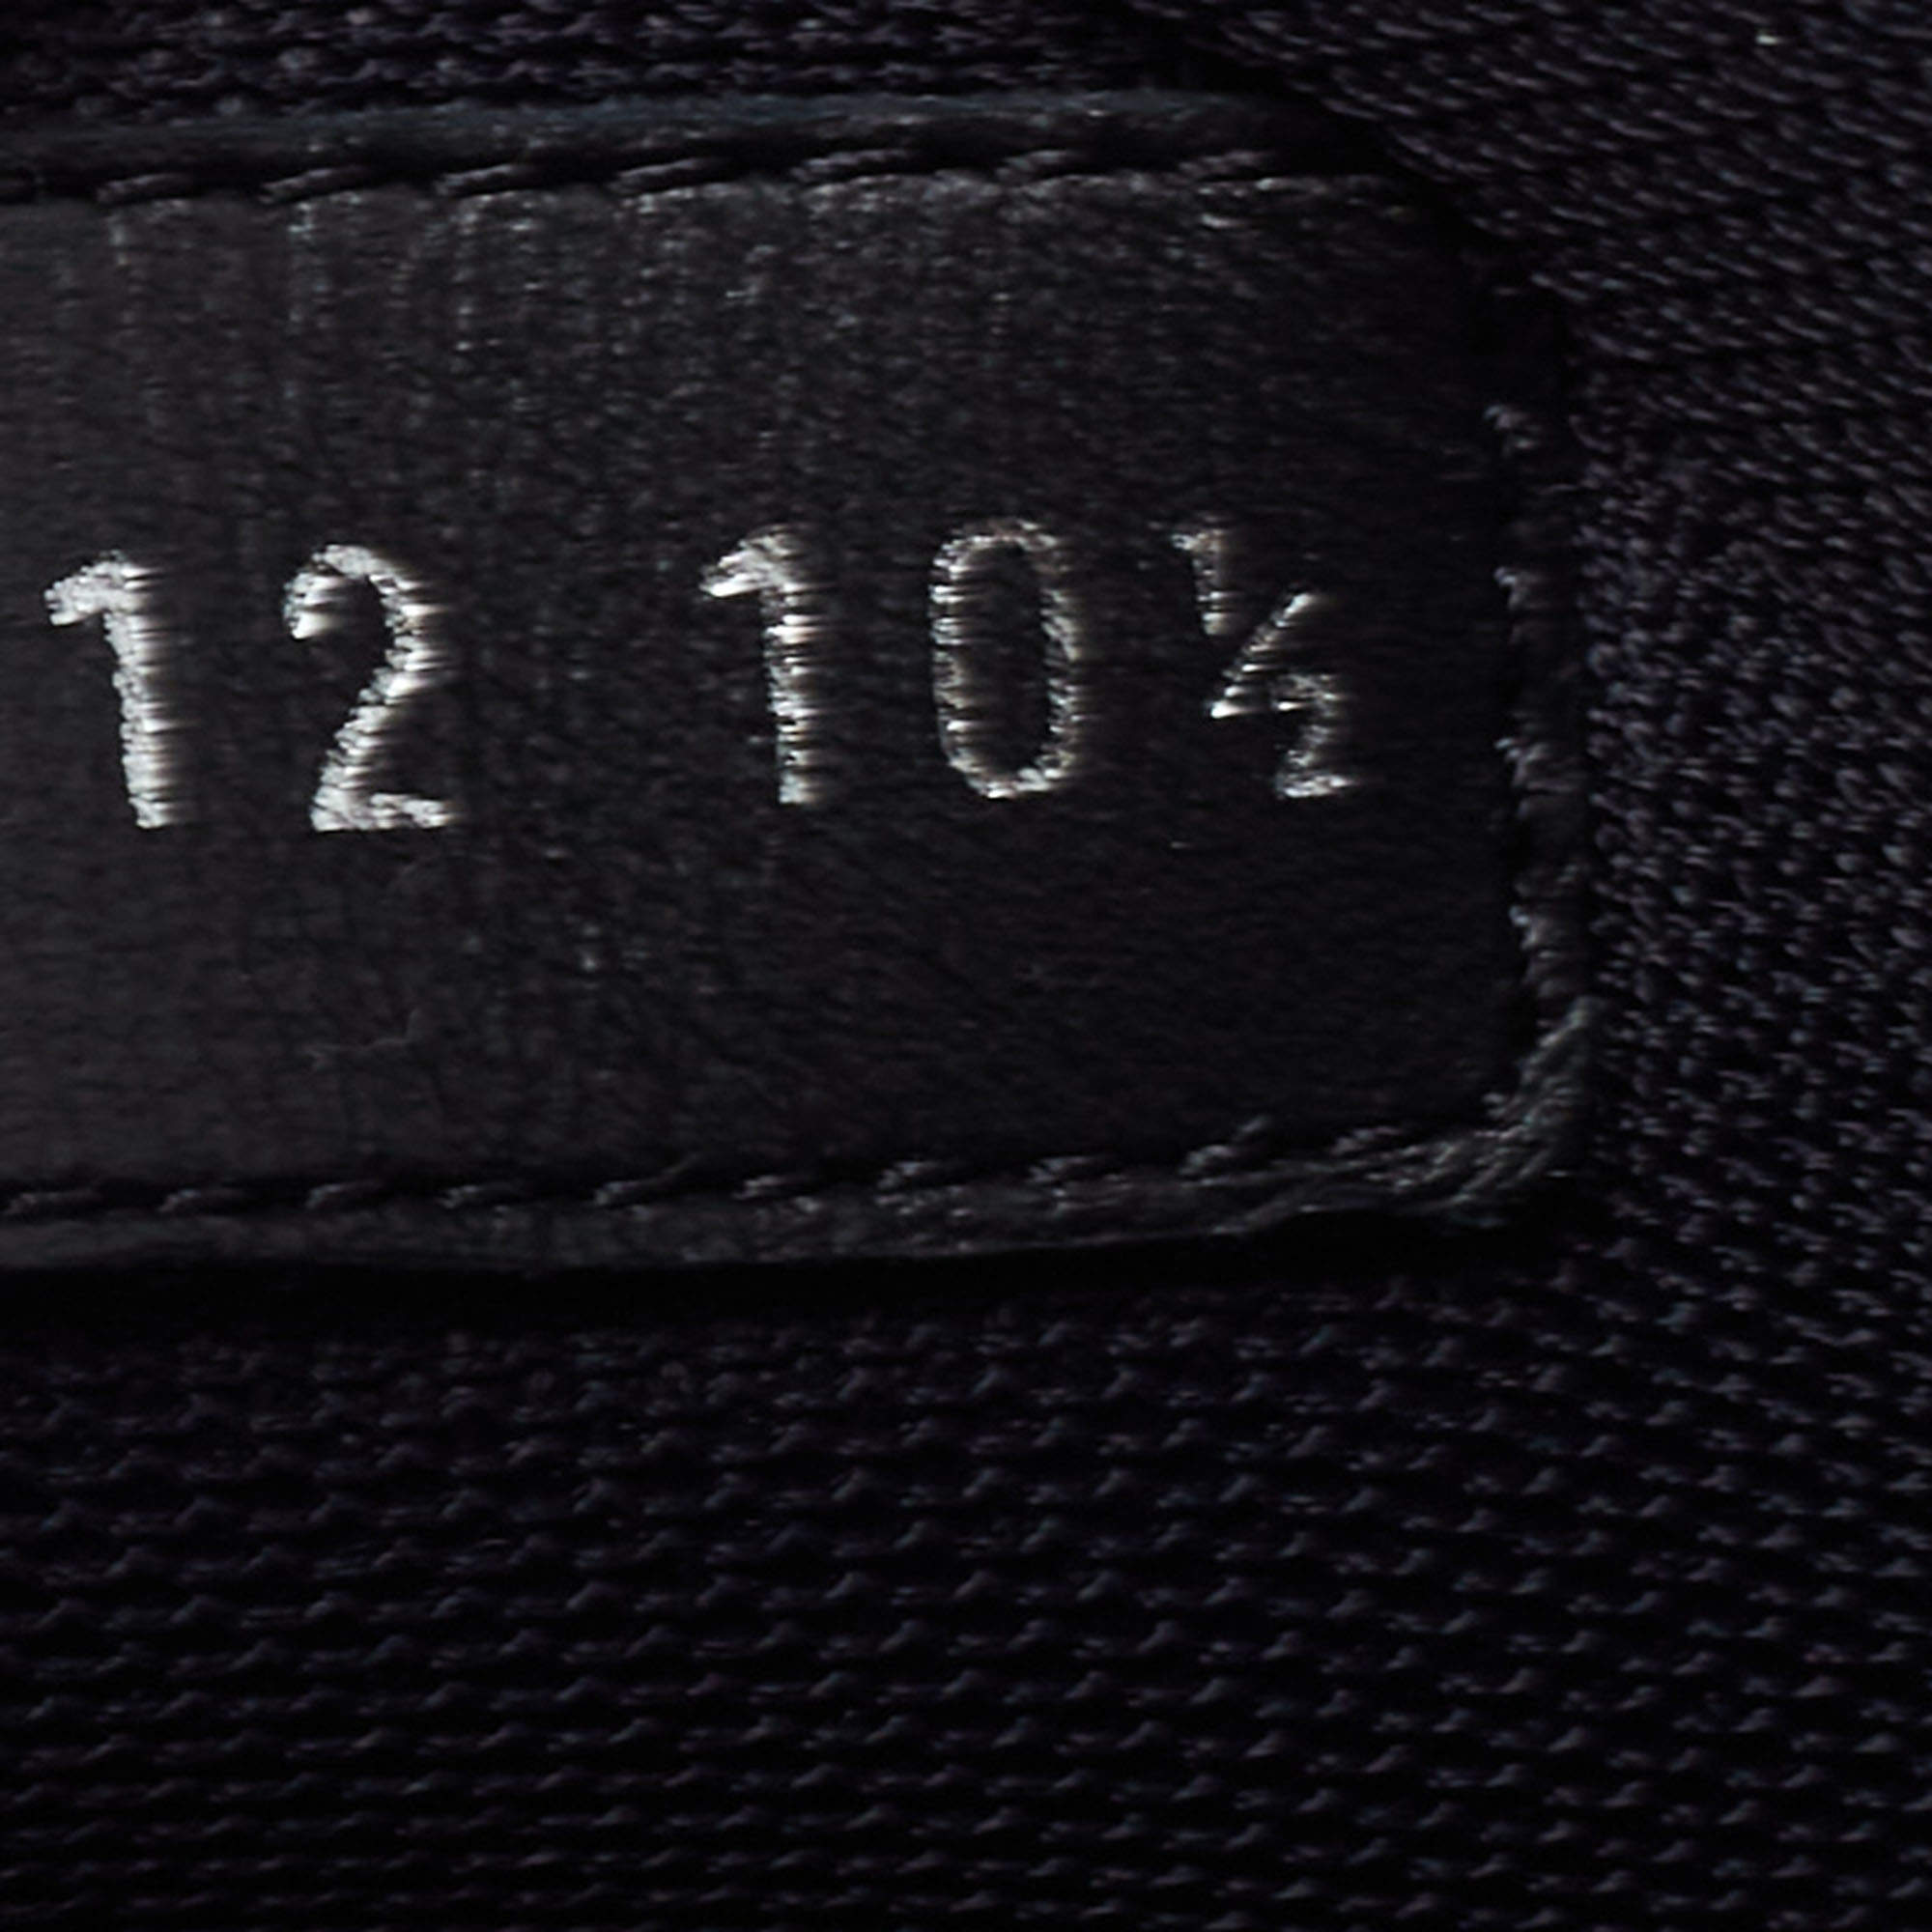 Louis Vuitton Men's Luxembourg Sneakers Monogram Leather Black 2356511